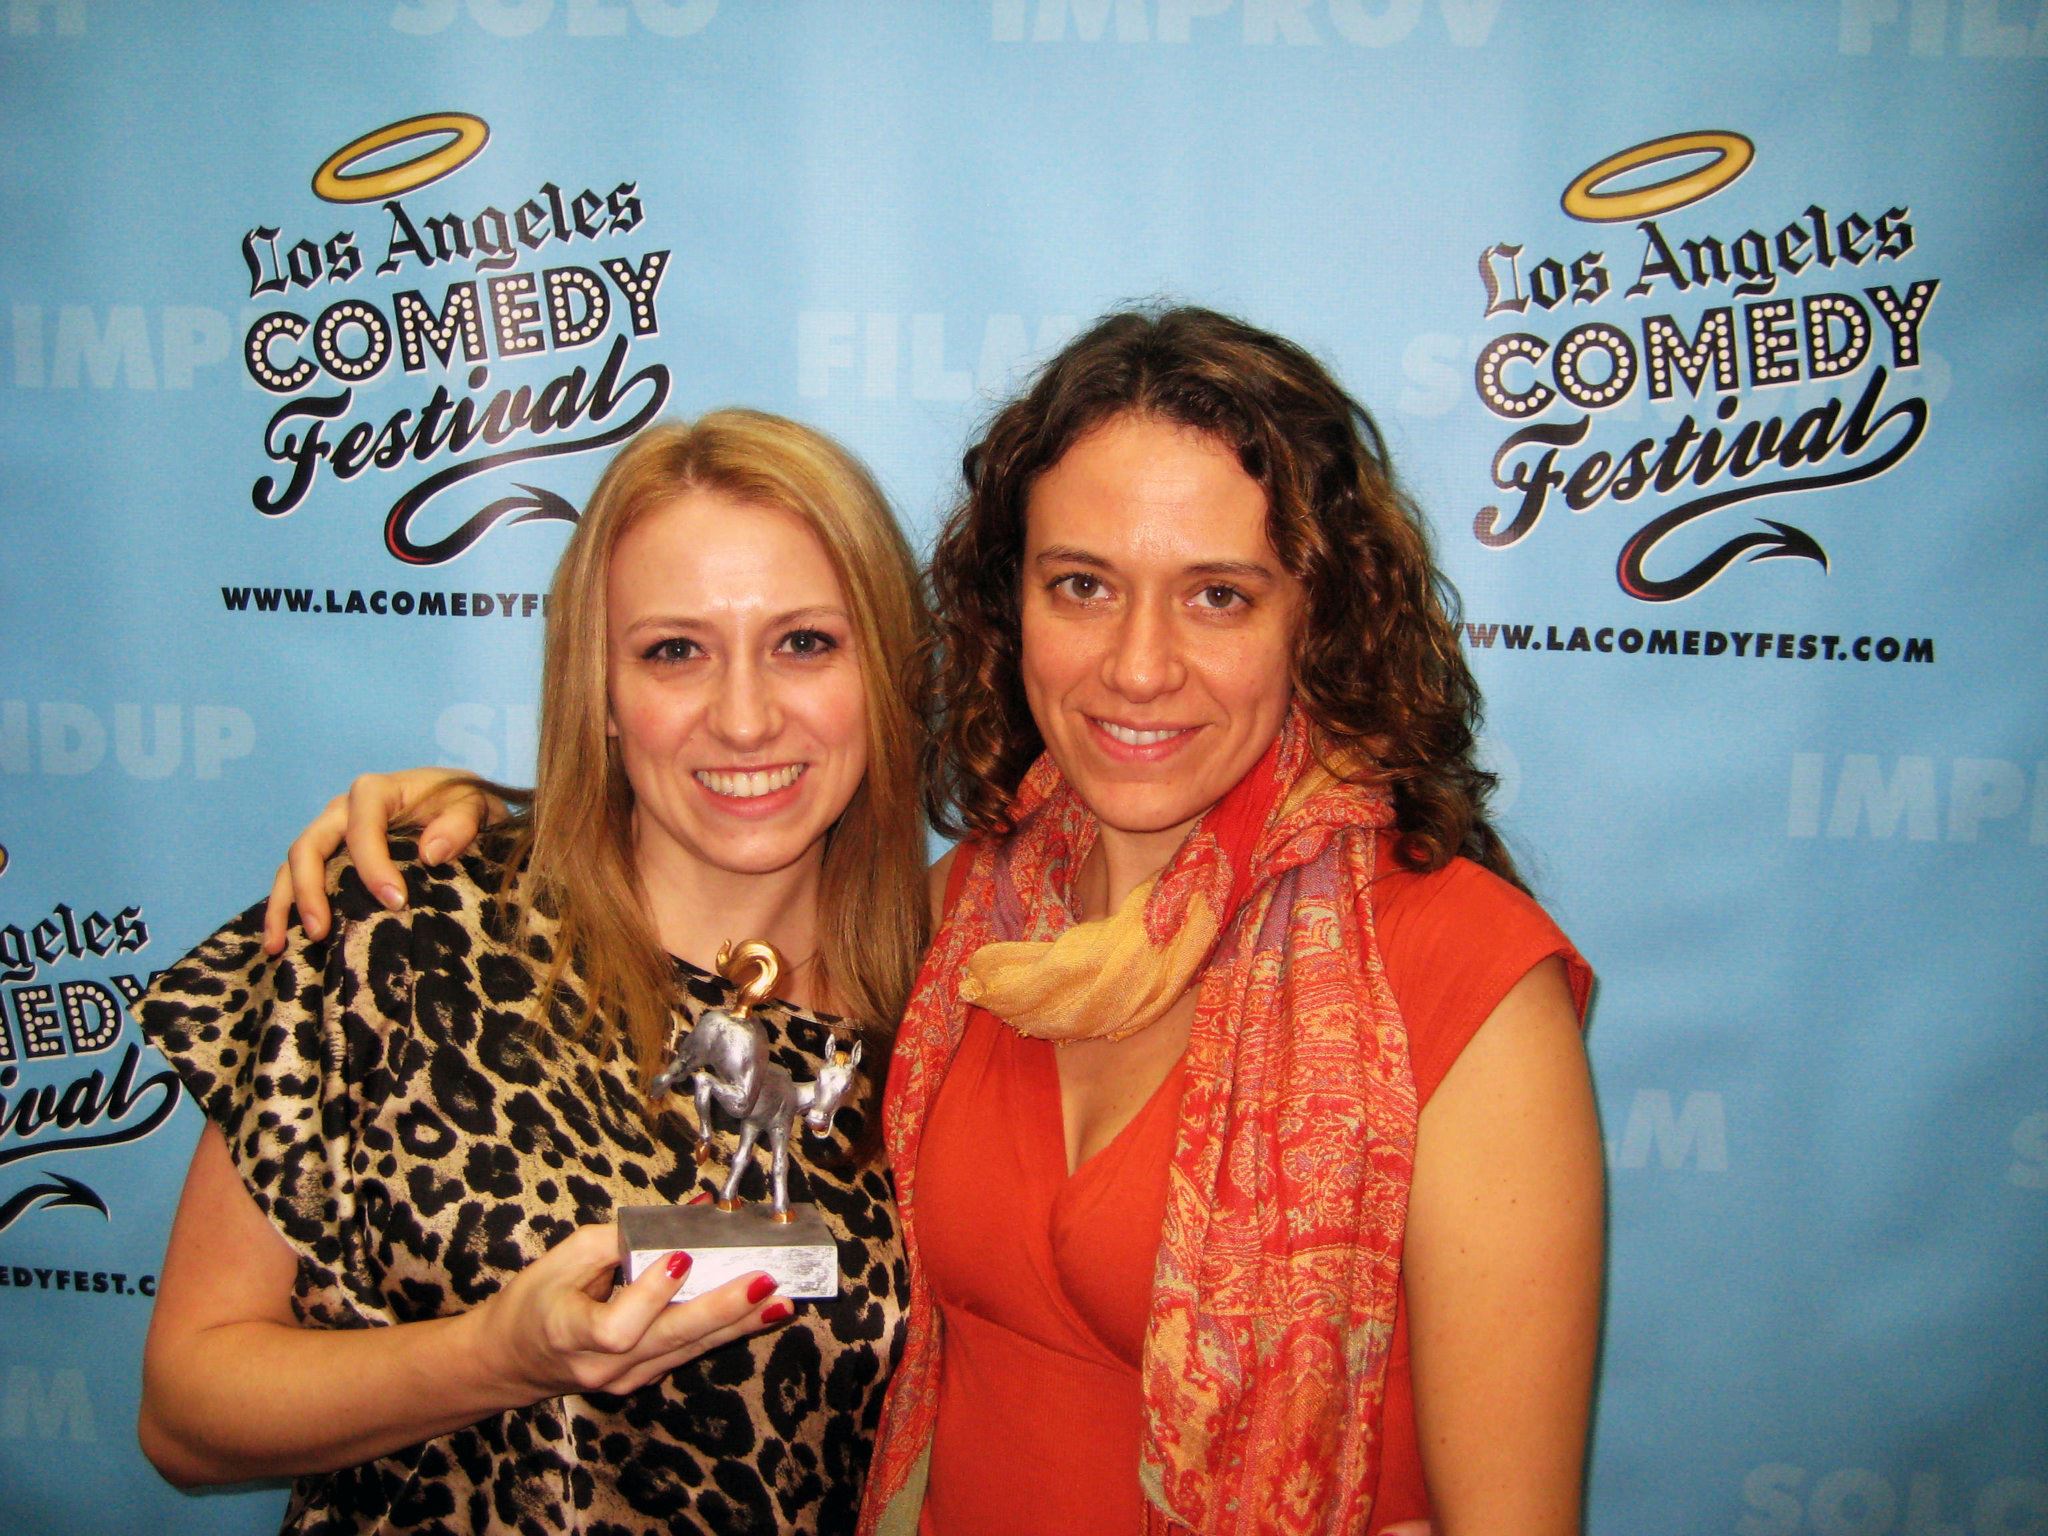 Winner of Best Ensemble at 2011 Los Angeles Comedy Festival